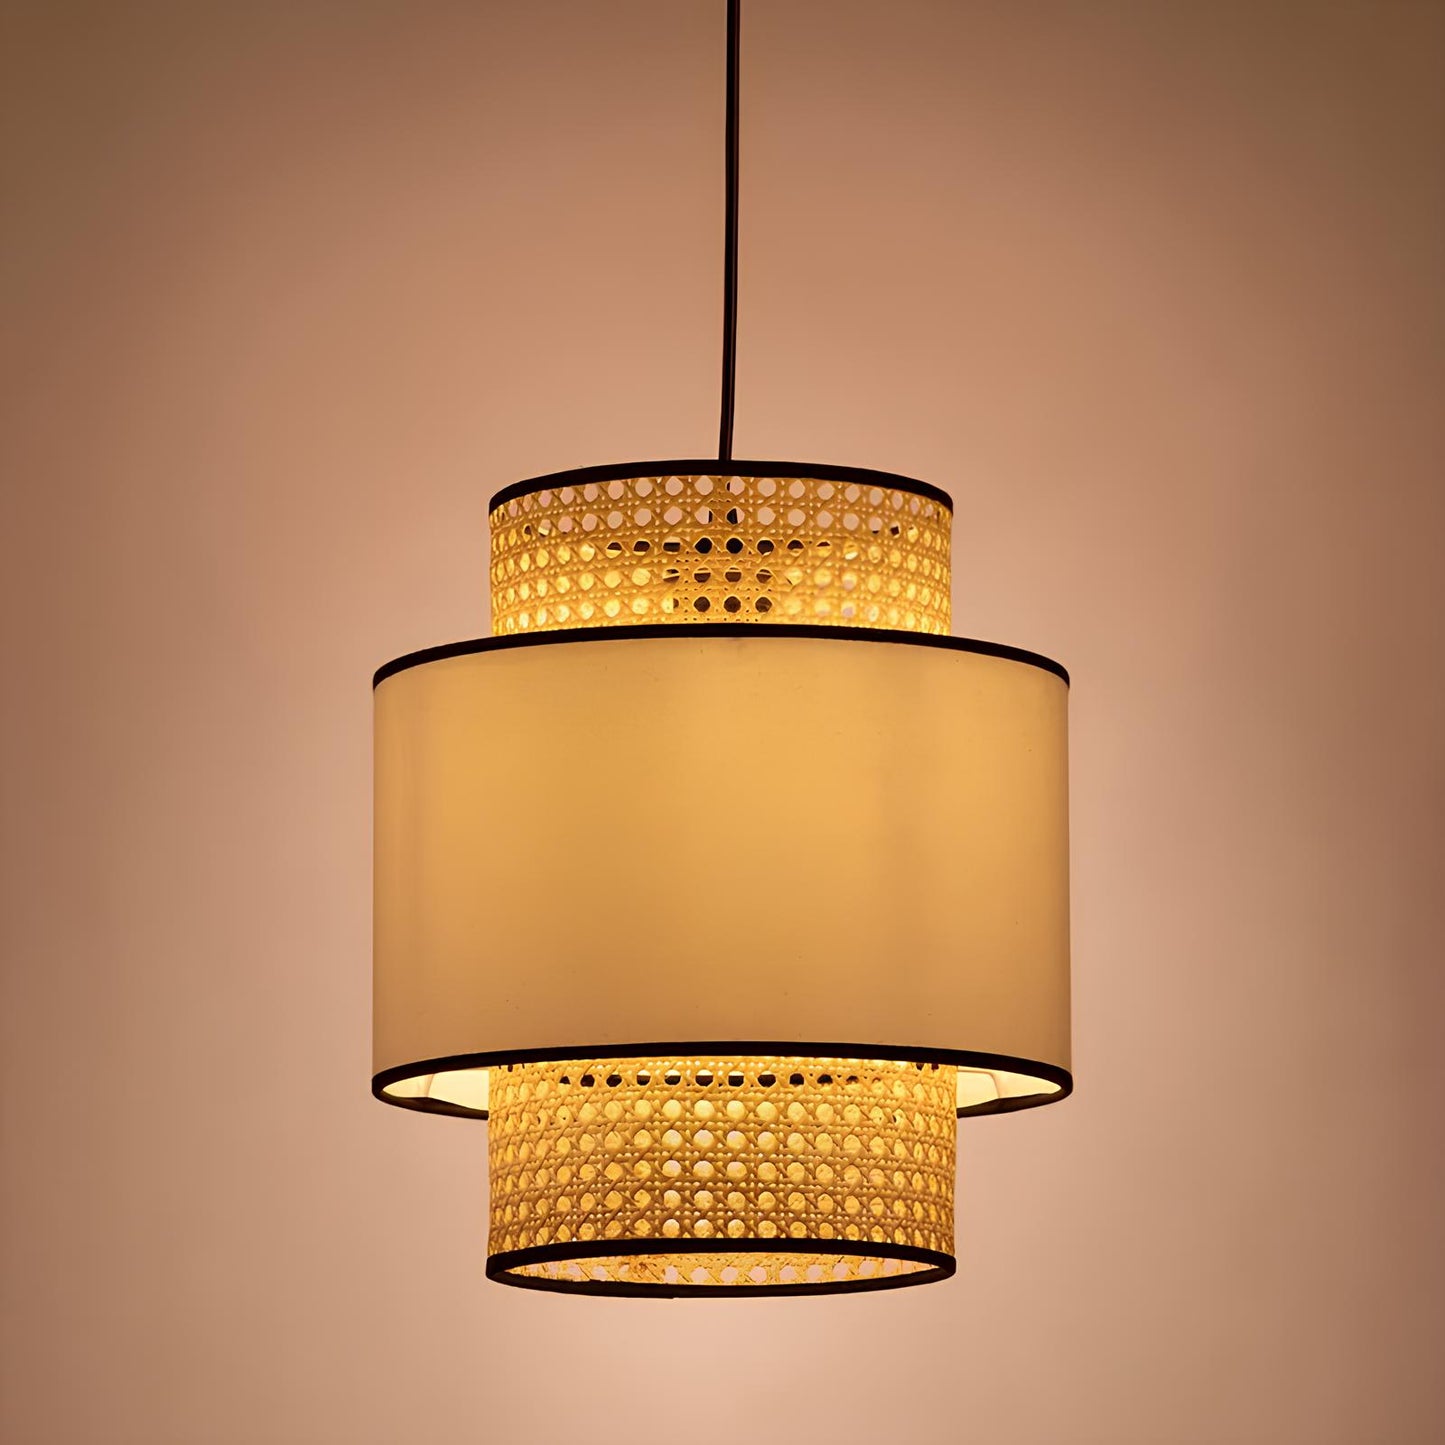 Bamboo Hanging lamp for Living Room | Rattan Pendant light | Cane ceiling light - Idhant - Akway